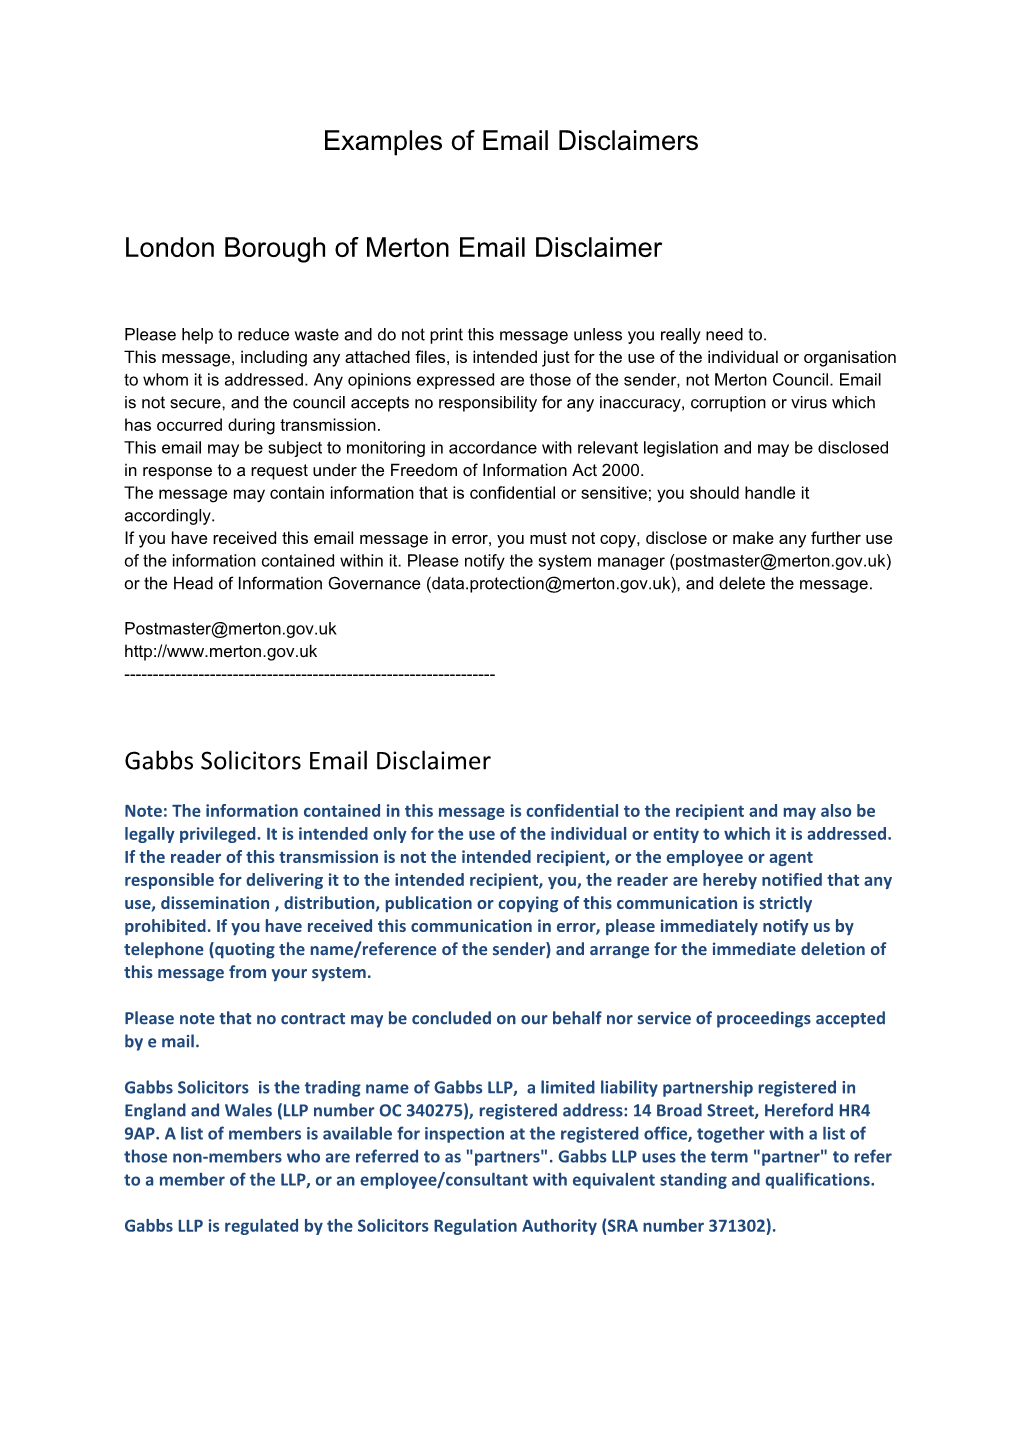 London Borough of Merton Email Disclaimer